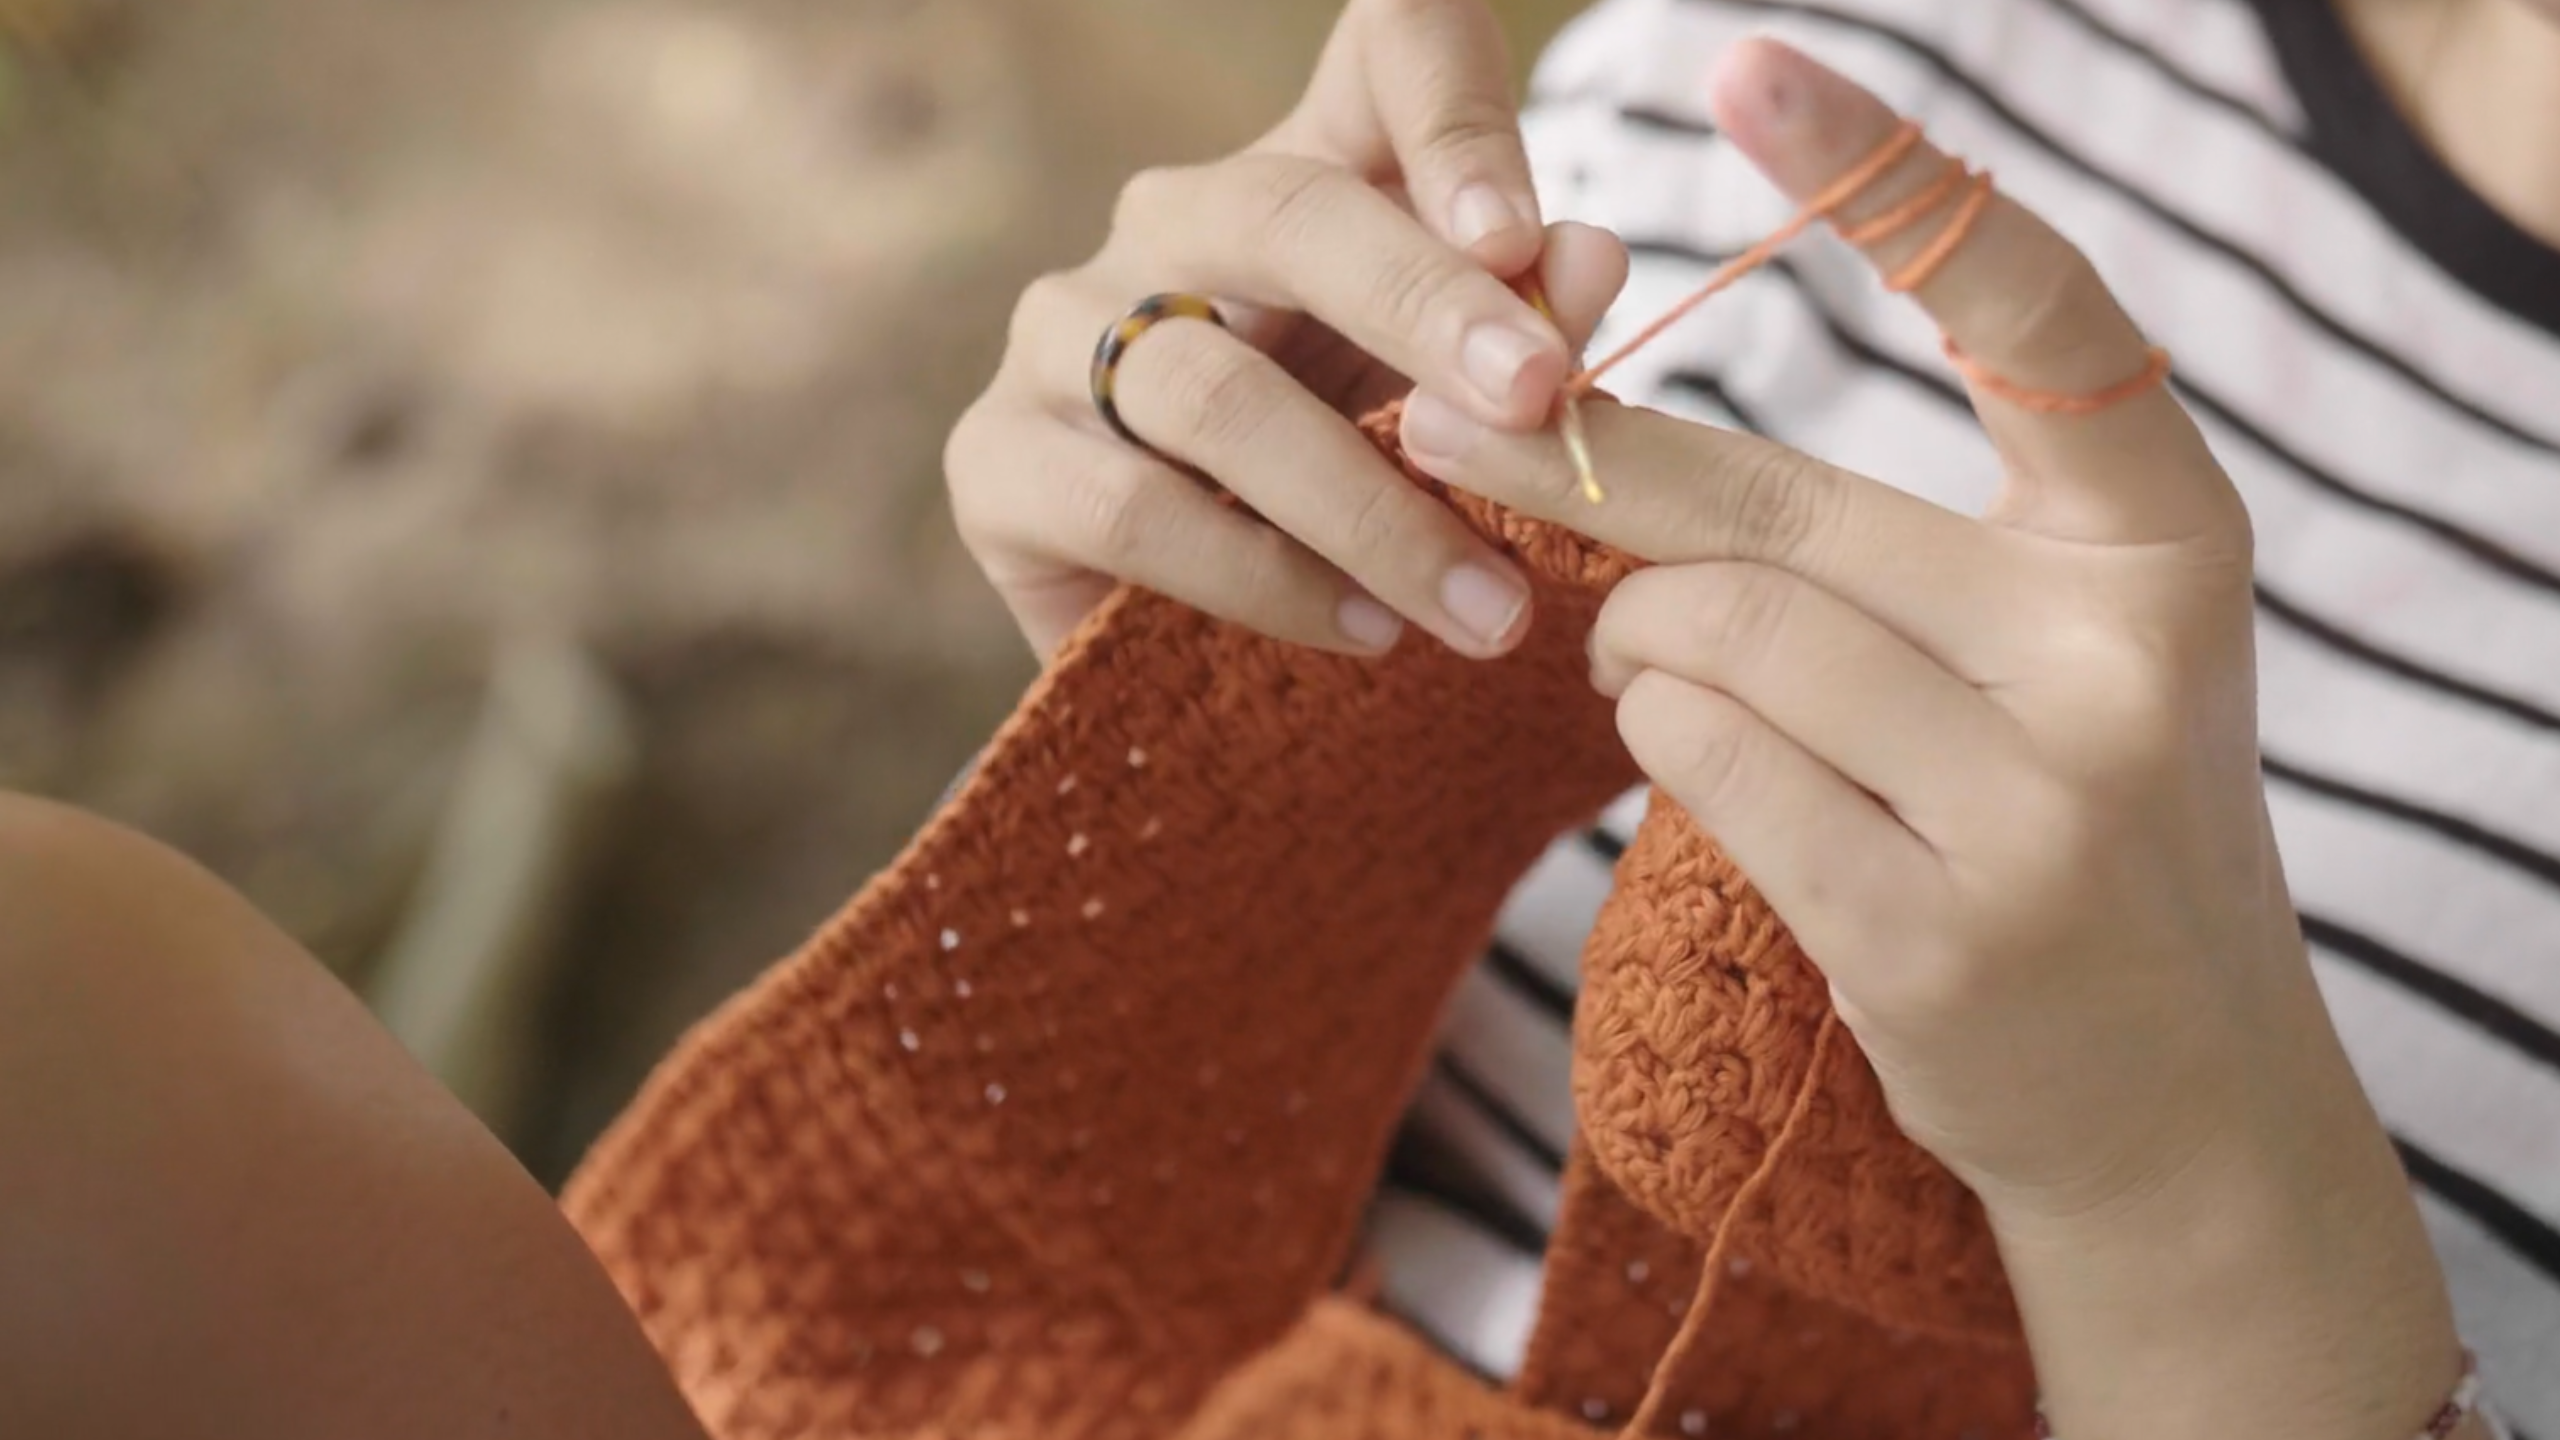 Woman crocheting an orange garment